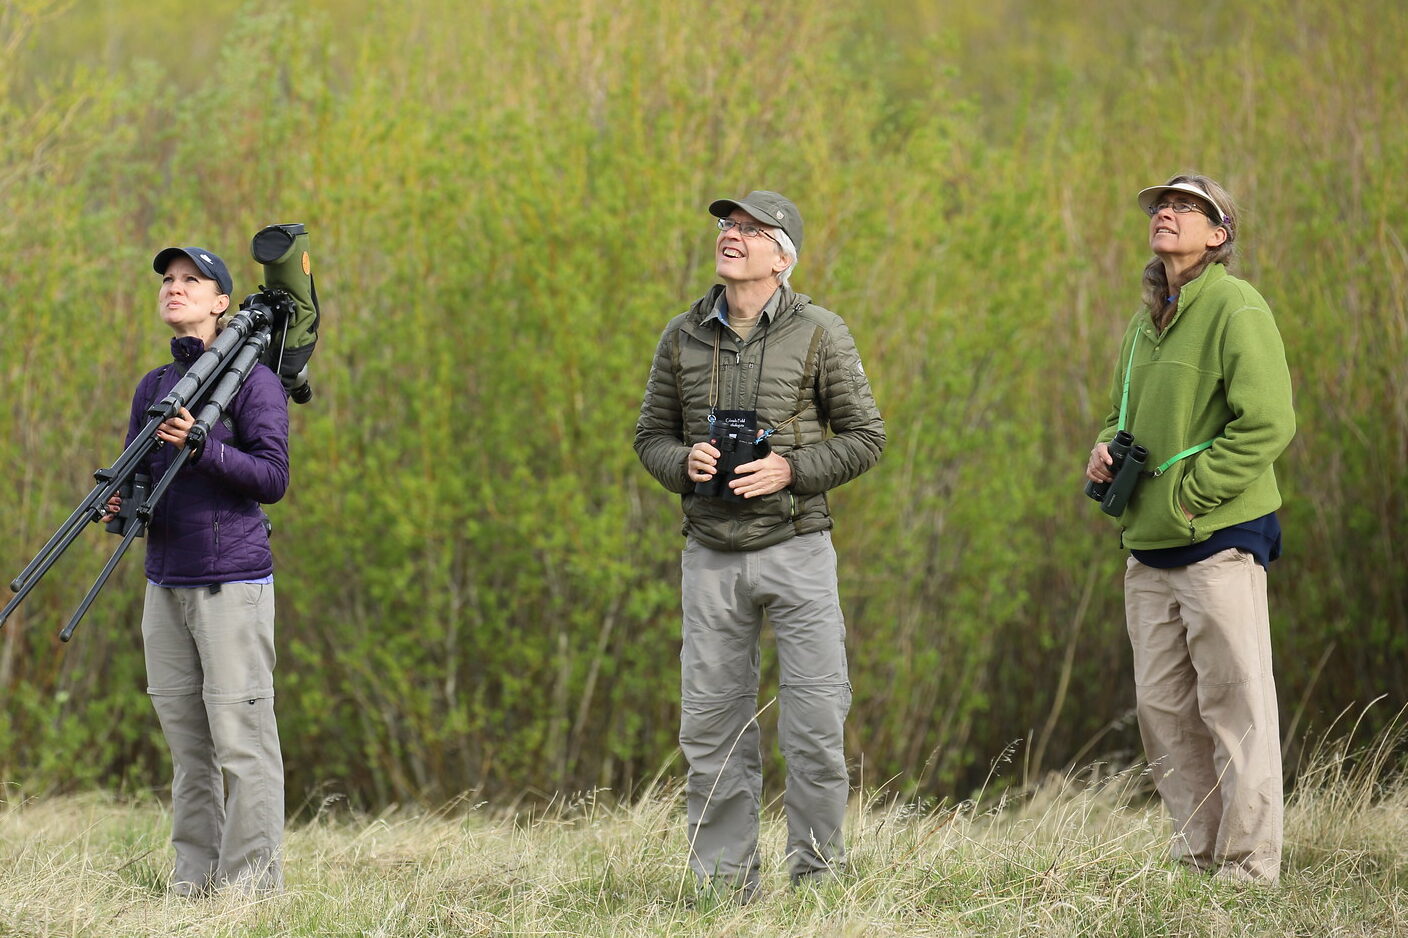 Group of five people standing in field, birding. 